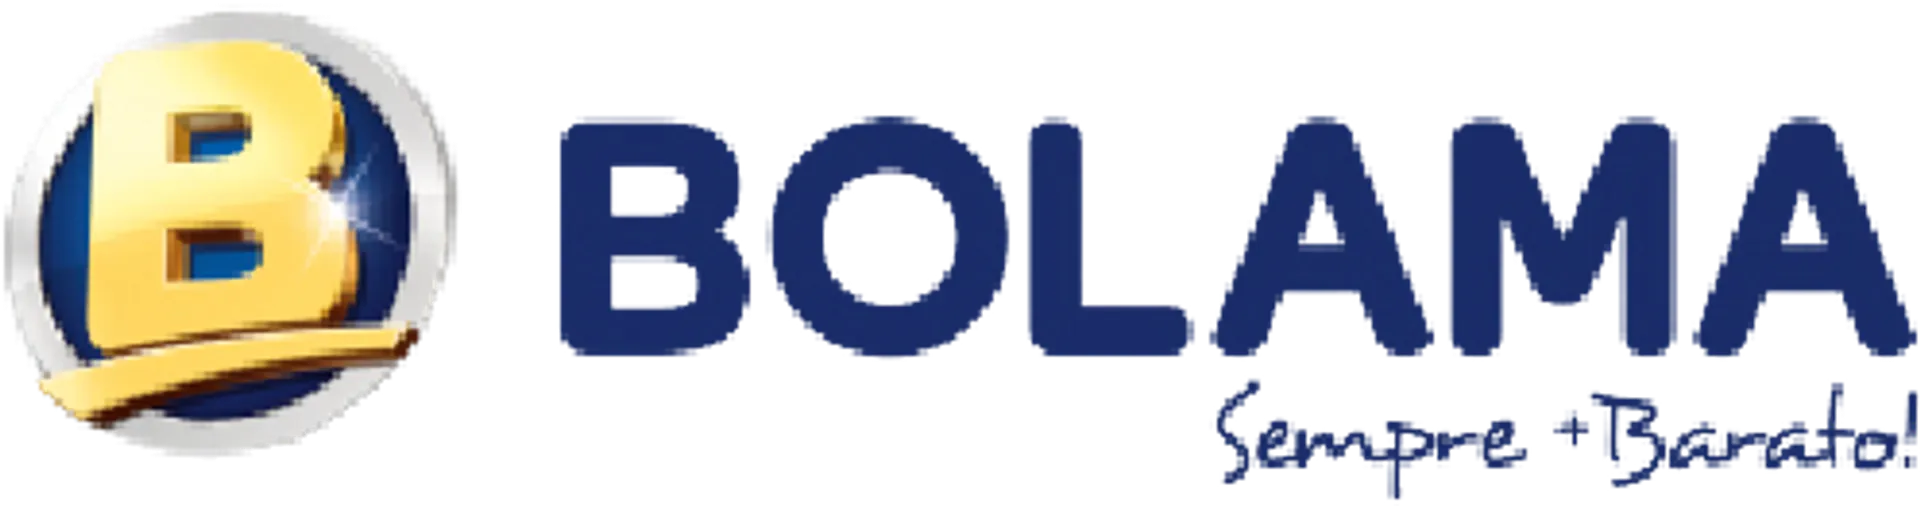 Bolama logo